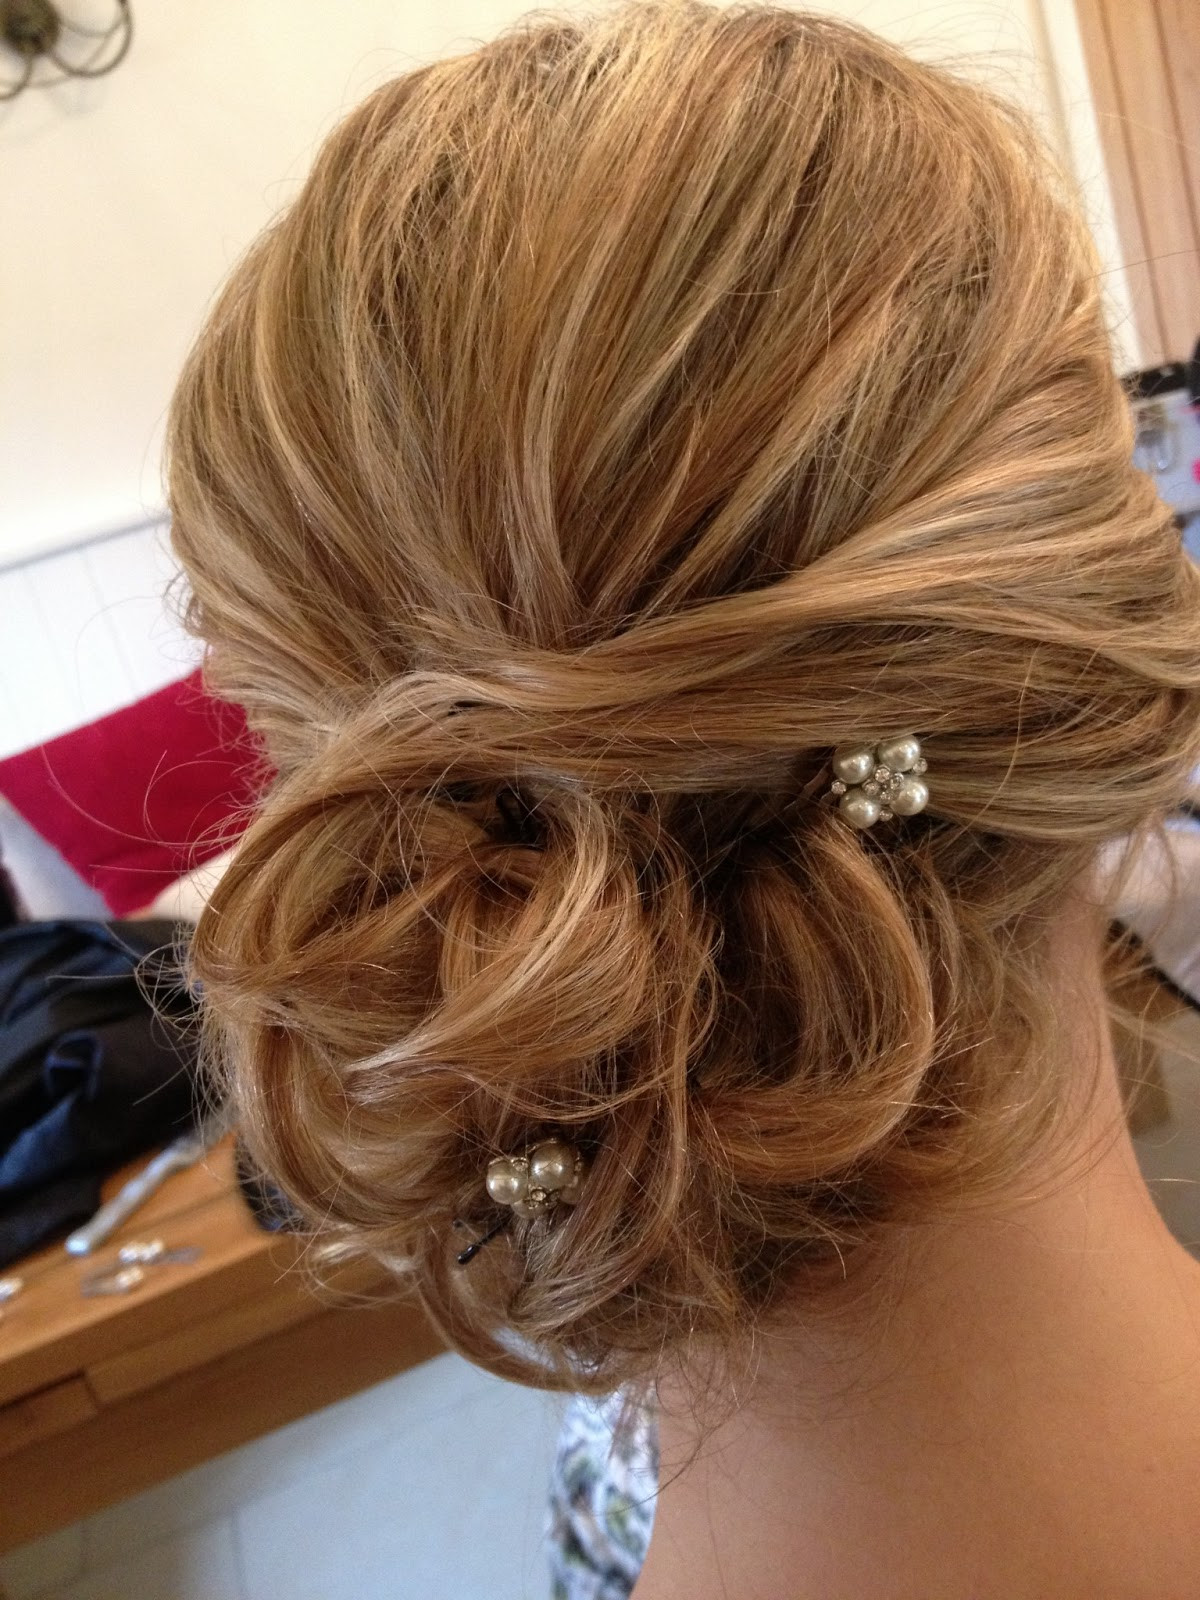 Side Buns Wedding Hairstyles
 Kingscote Barn Wedding Hair Styling for Frances